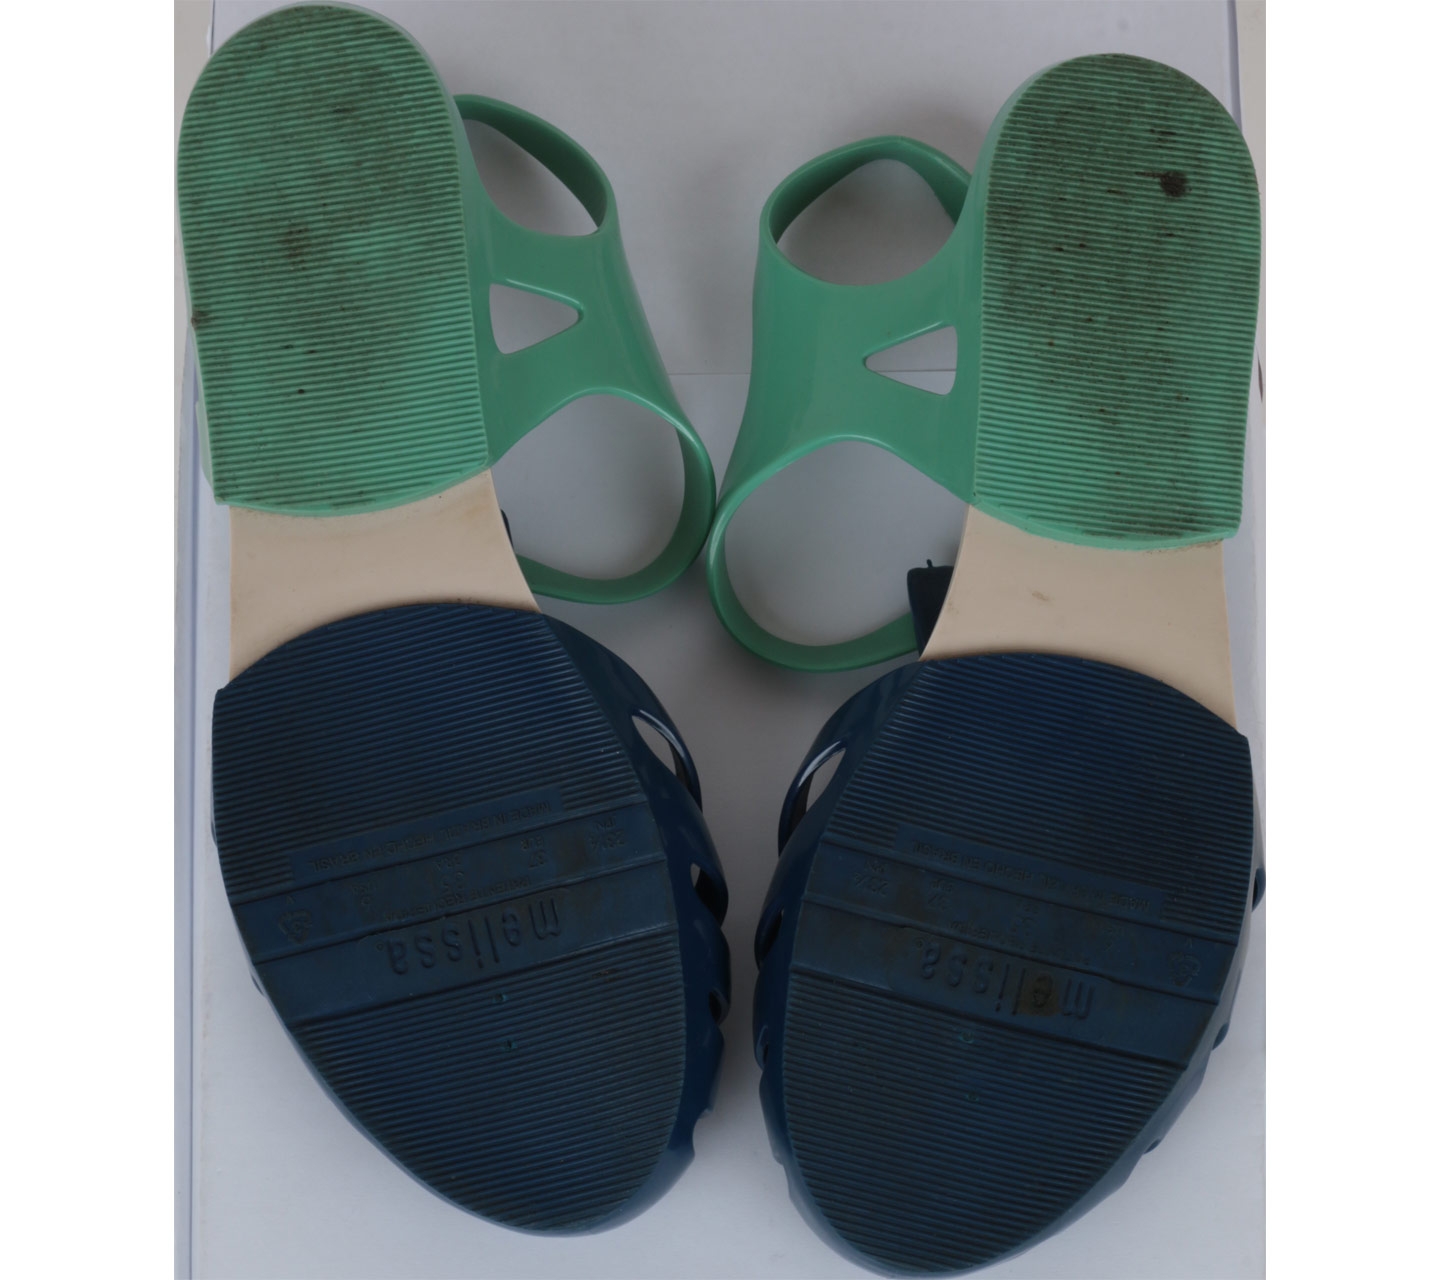 Melissa Green And Blue T-Bar Sandals